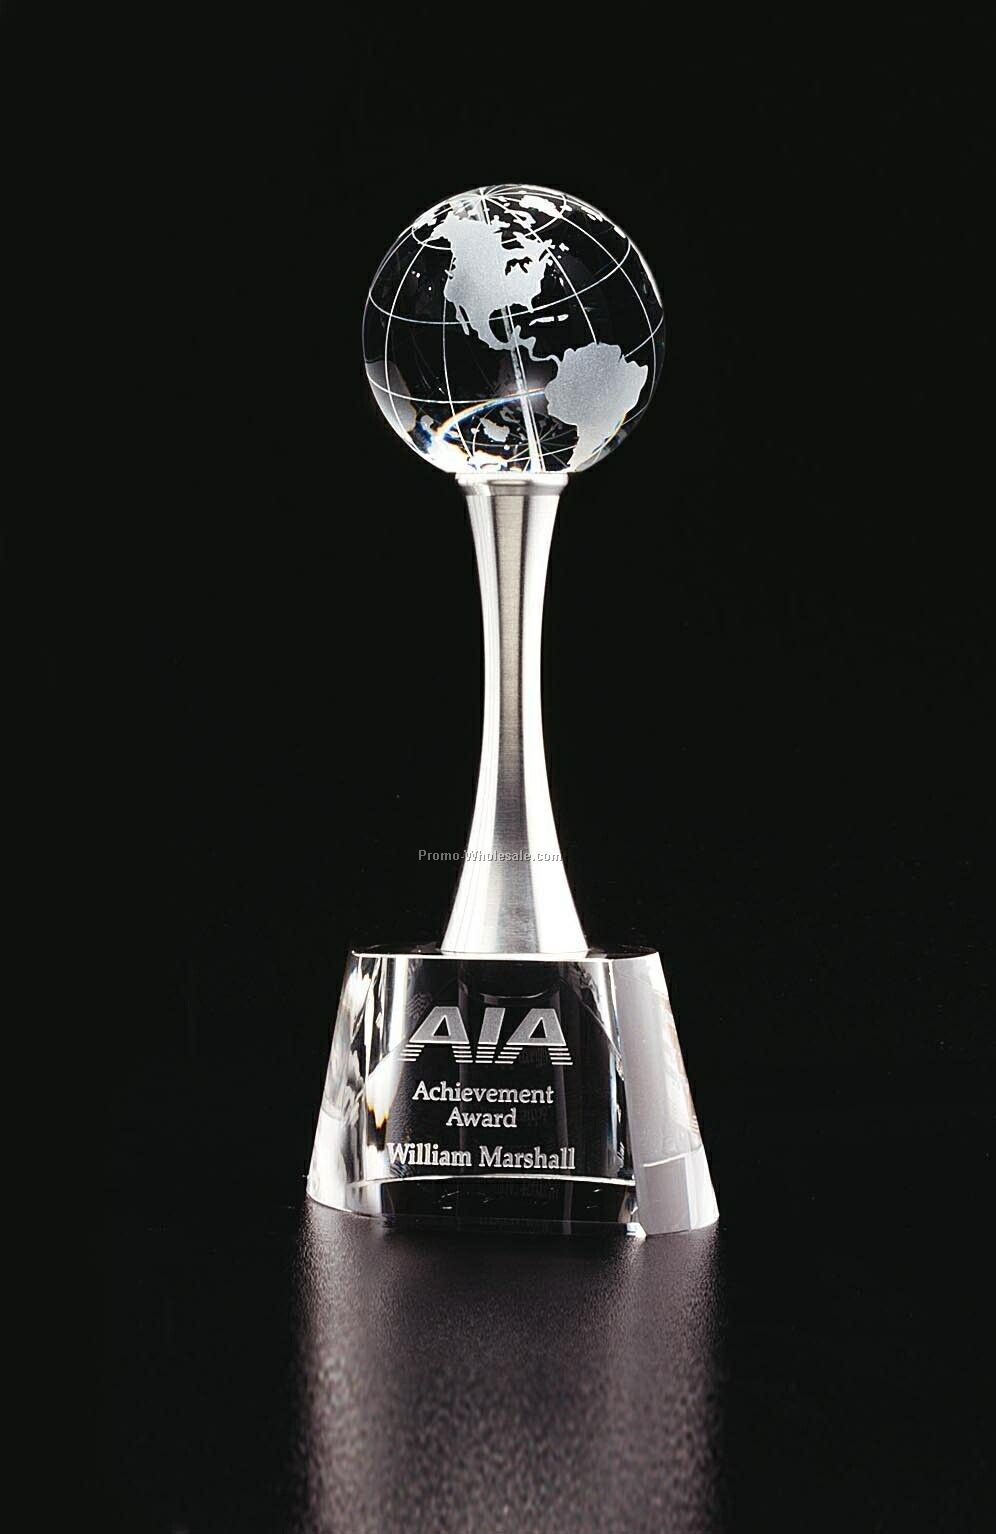 Jaffa Small World Above Award